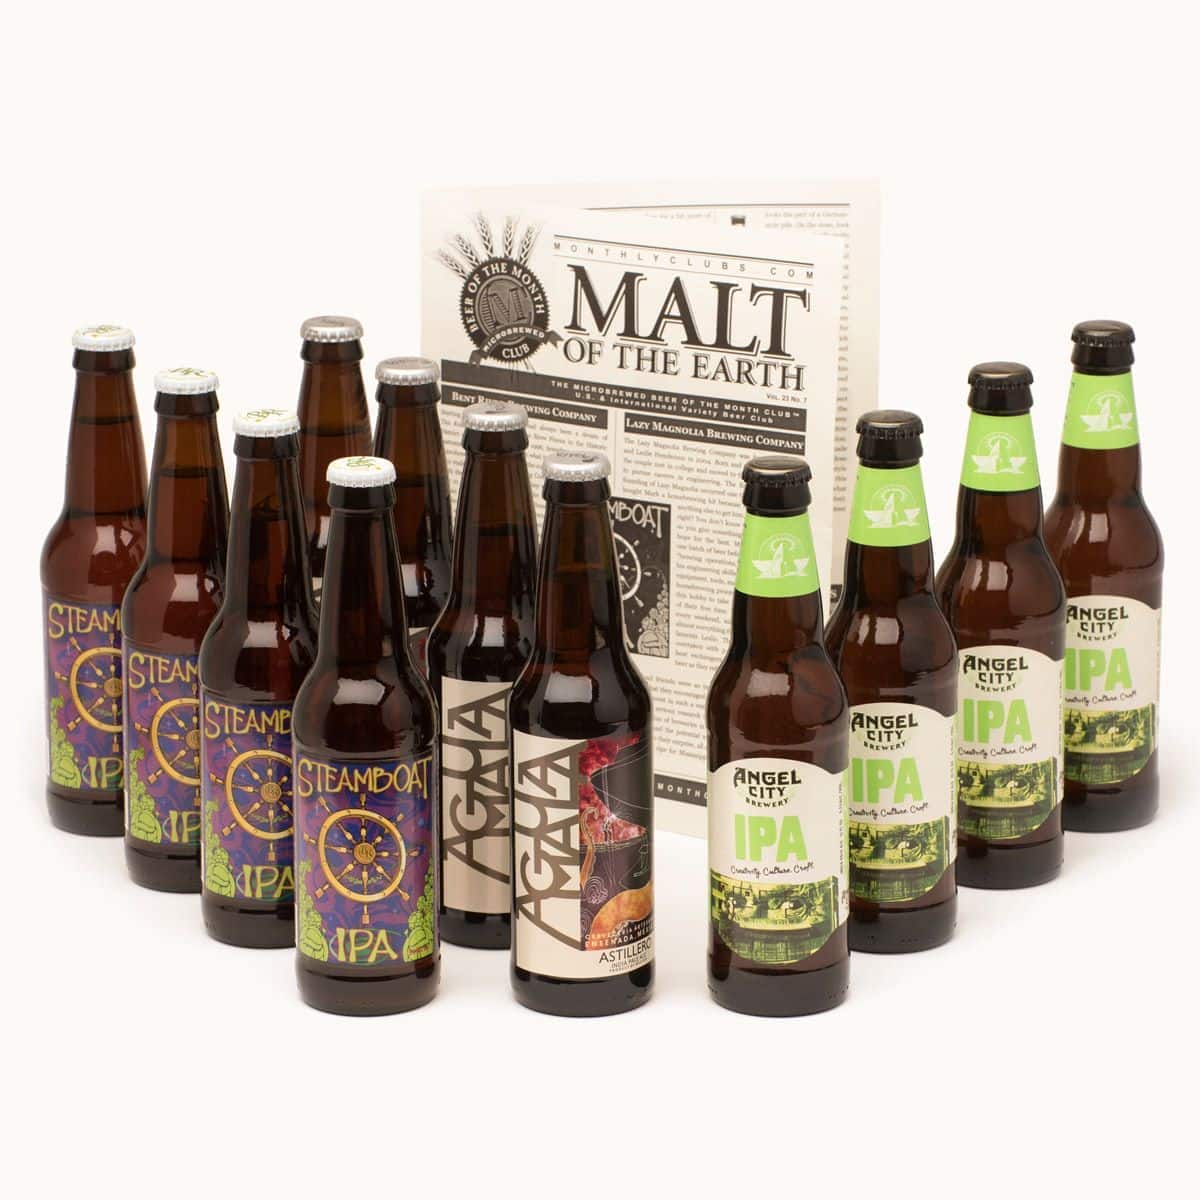 IPA Craft Beer Gift Crate